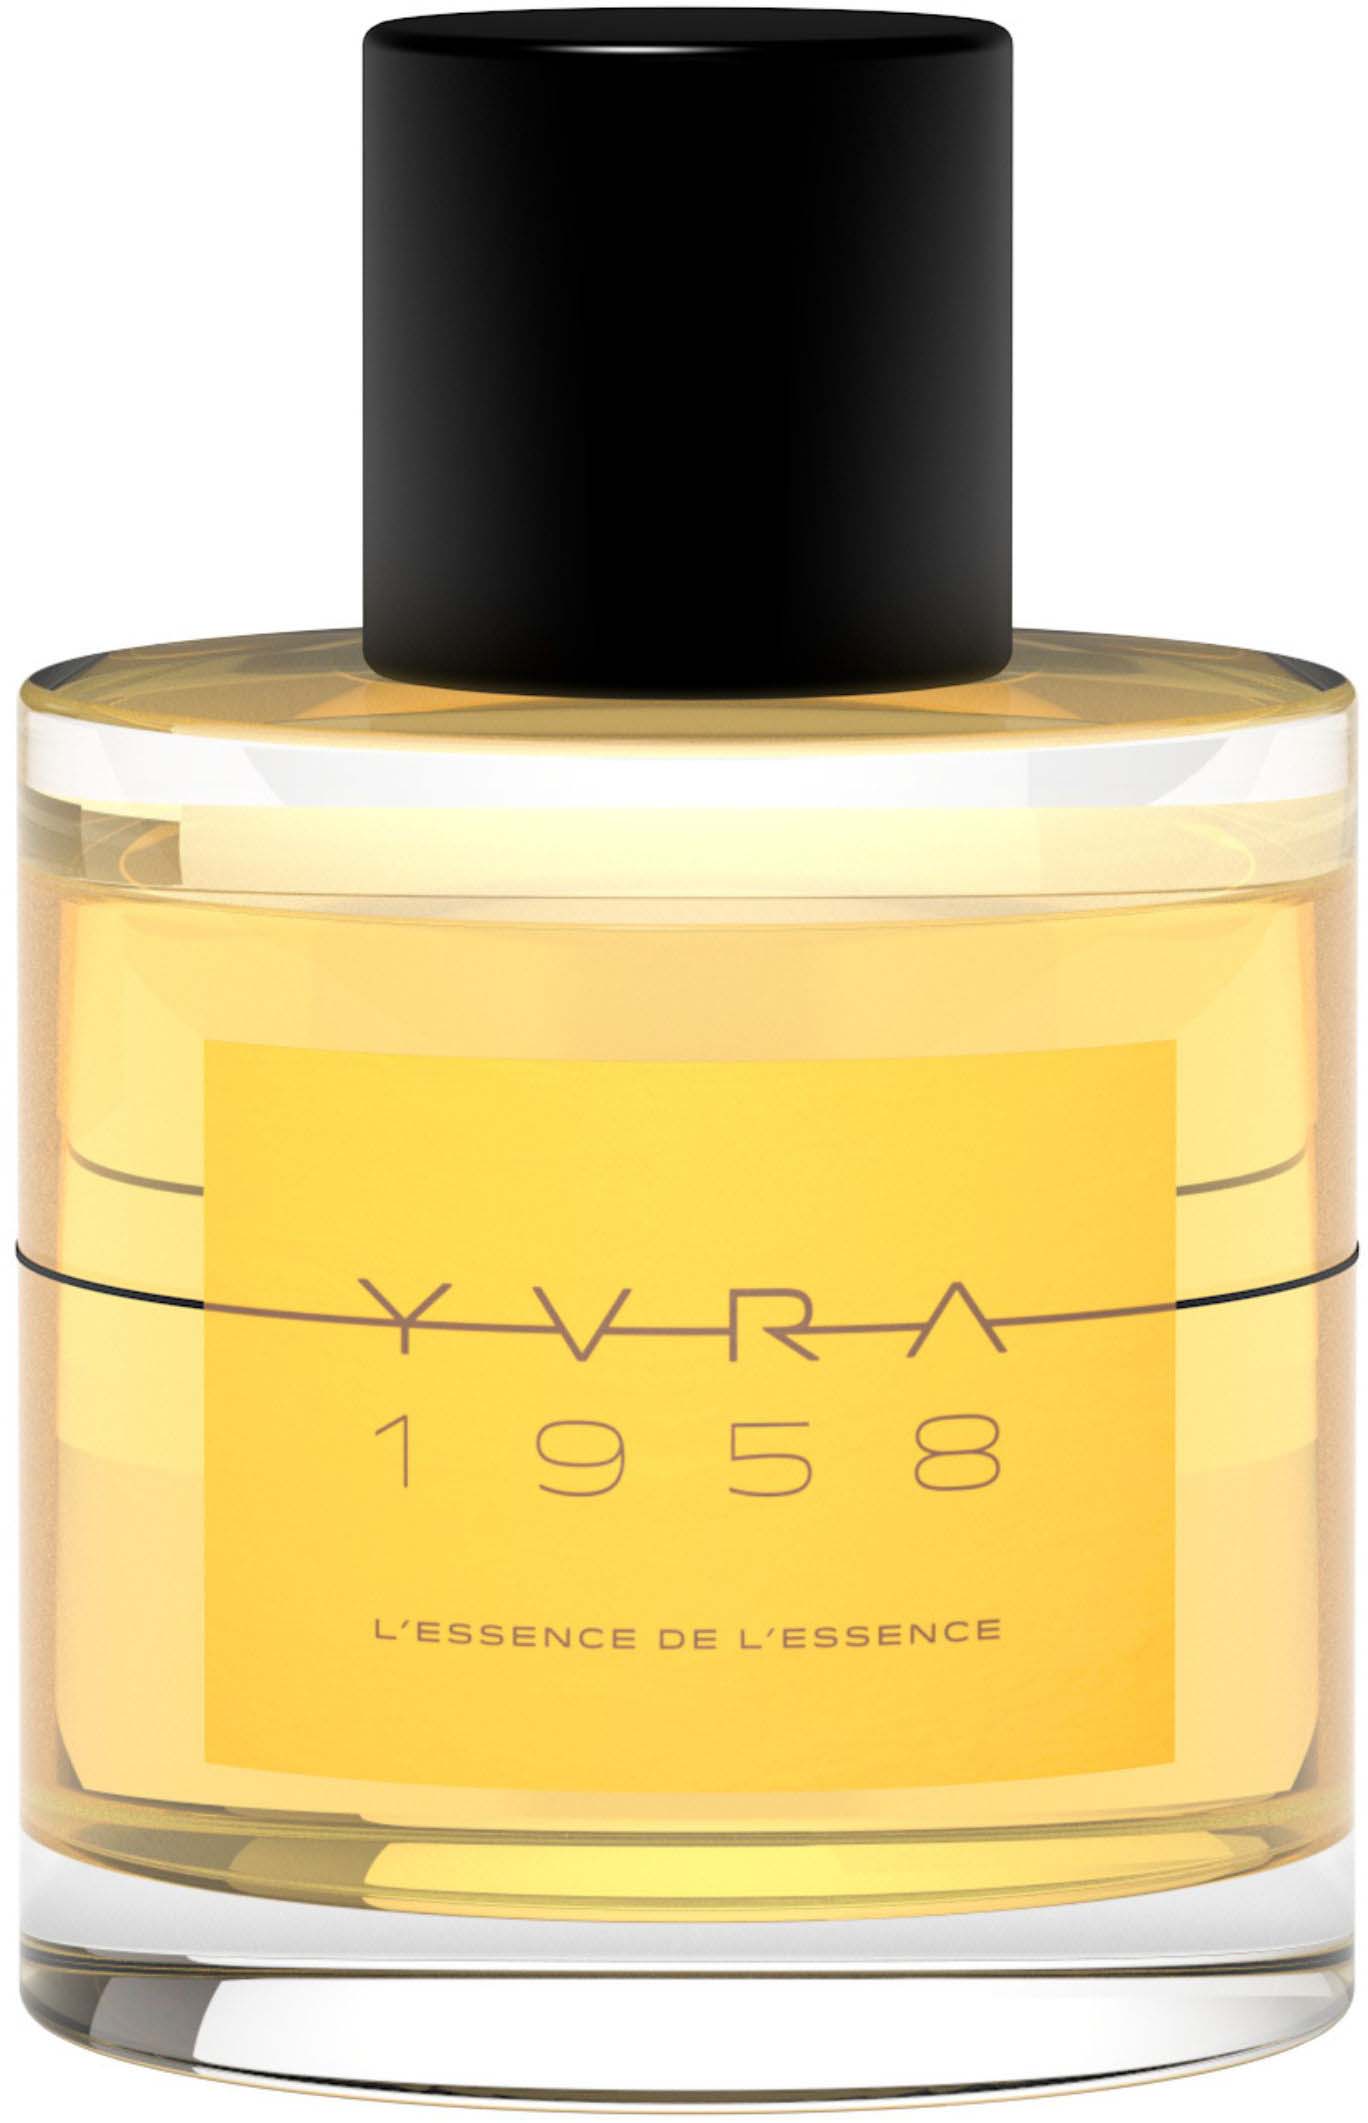 yvra 1958 - l'essence de l'essence woda perfumowana 100 ml   